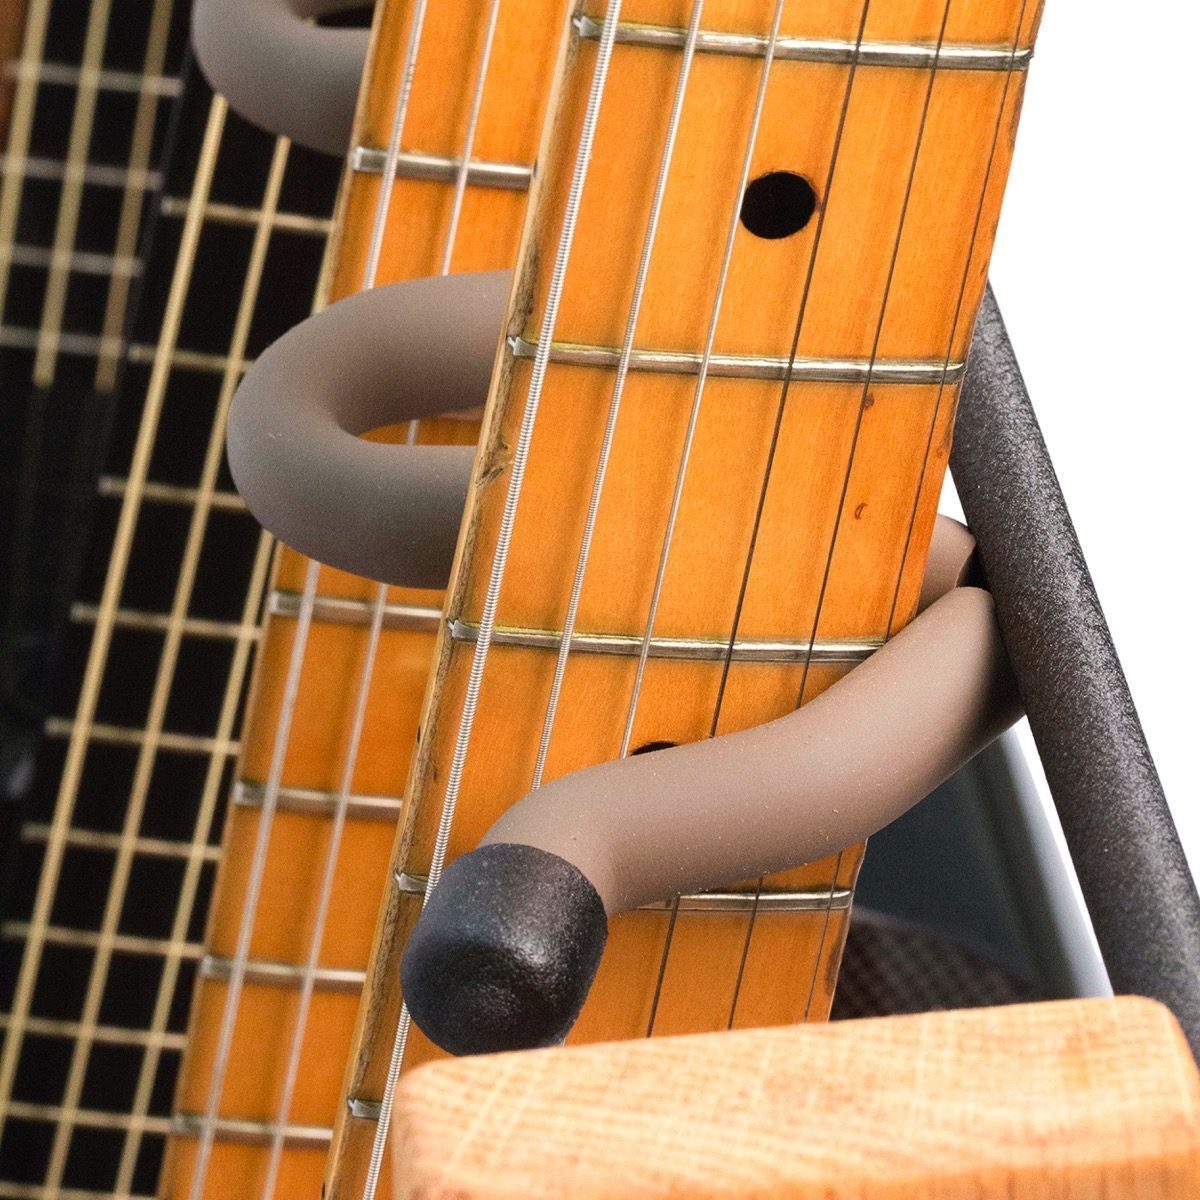 STRING-SWING Guitar Rack Black Walnut